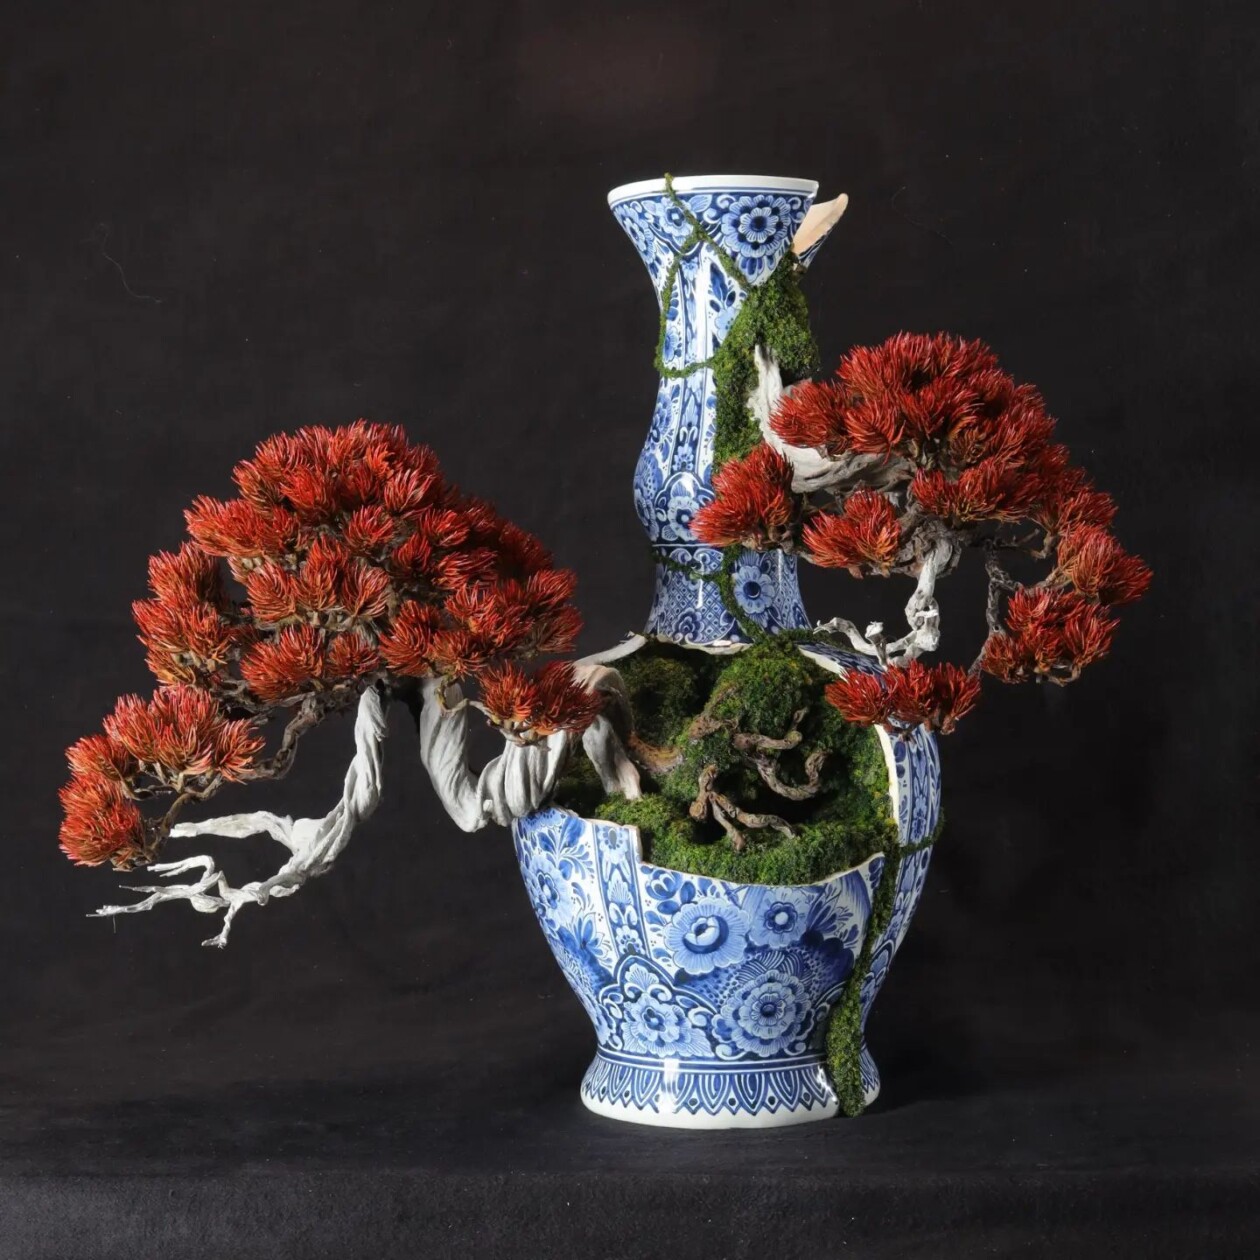 Bonsai Tree Sculptures Beautifully Bursting Through Broken Porcelain Vessels In Patrick Bergsma's Artworks (5)